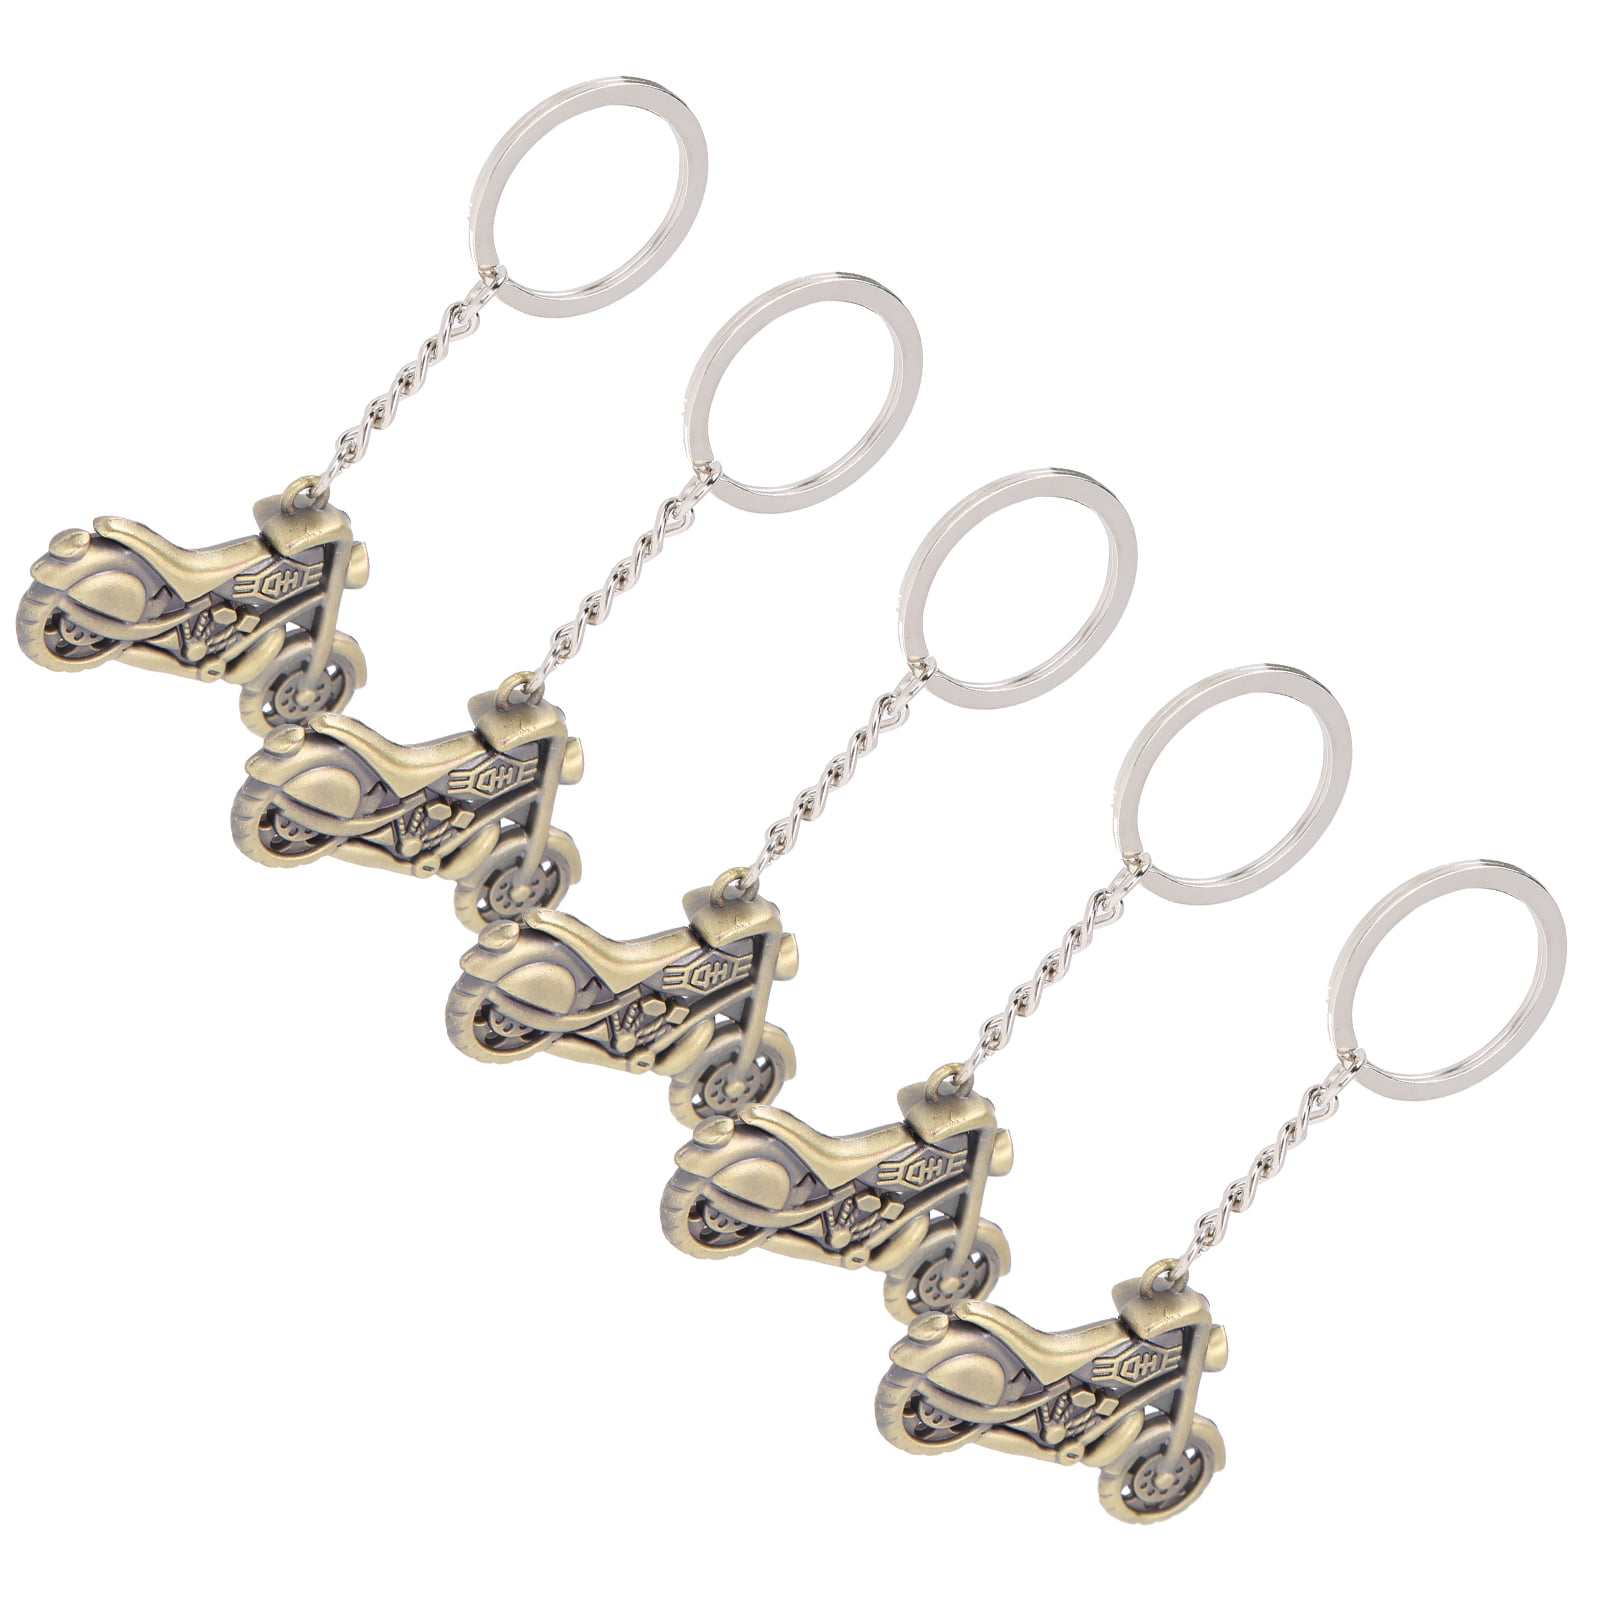 10 cm Silver Ball Key Chain Colliers pour À faire soi-même Jewelry Making Findings 20pcs 